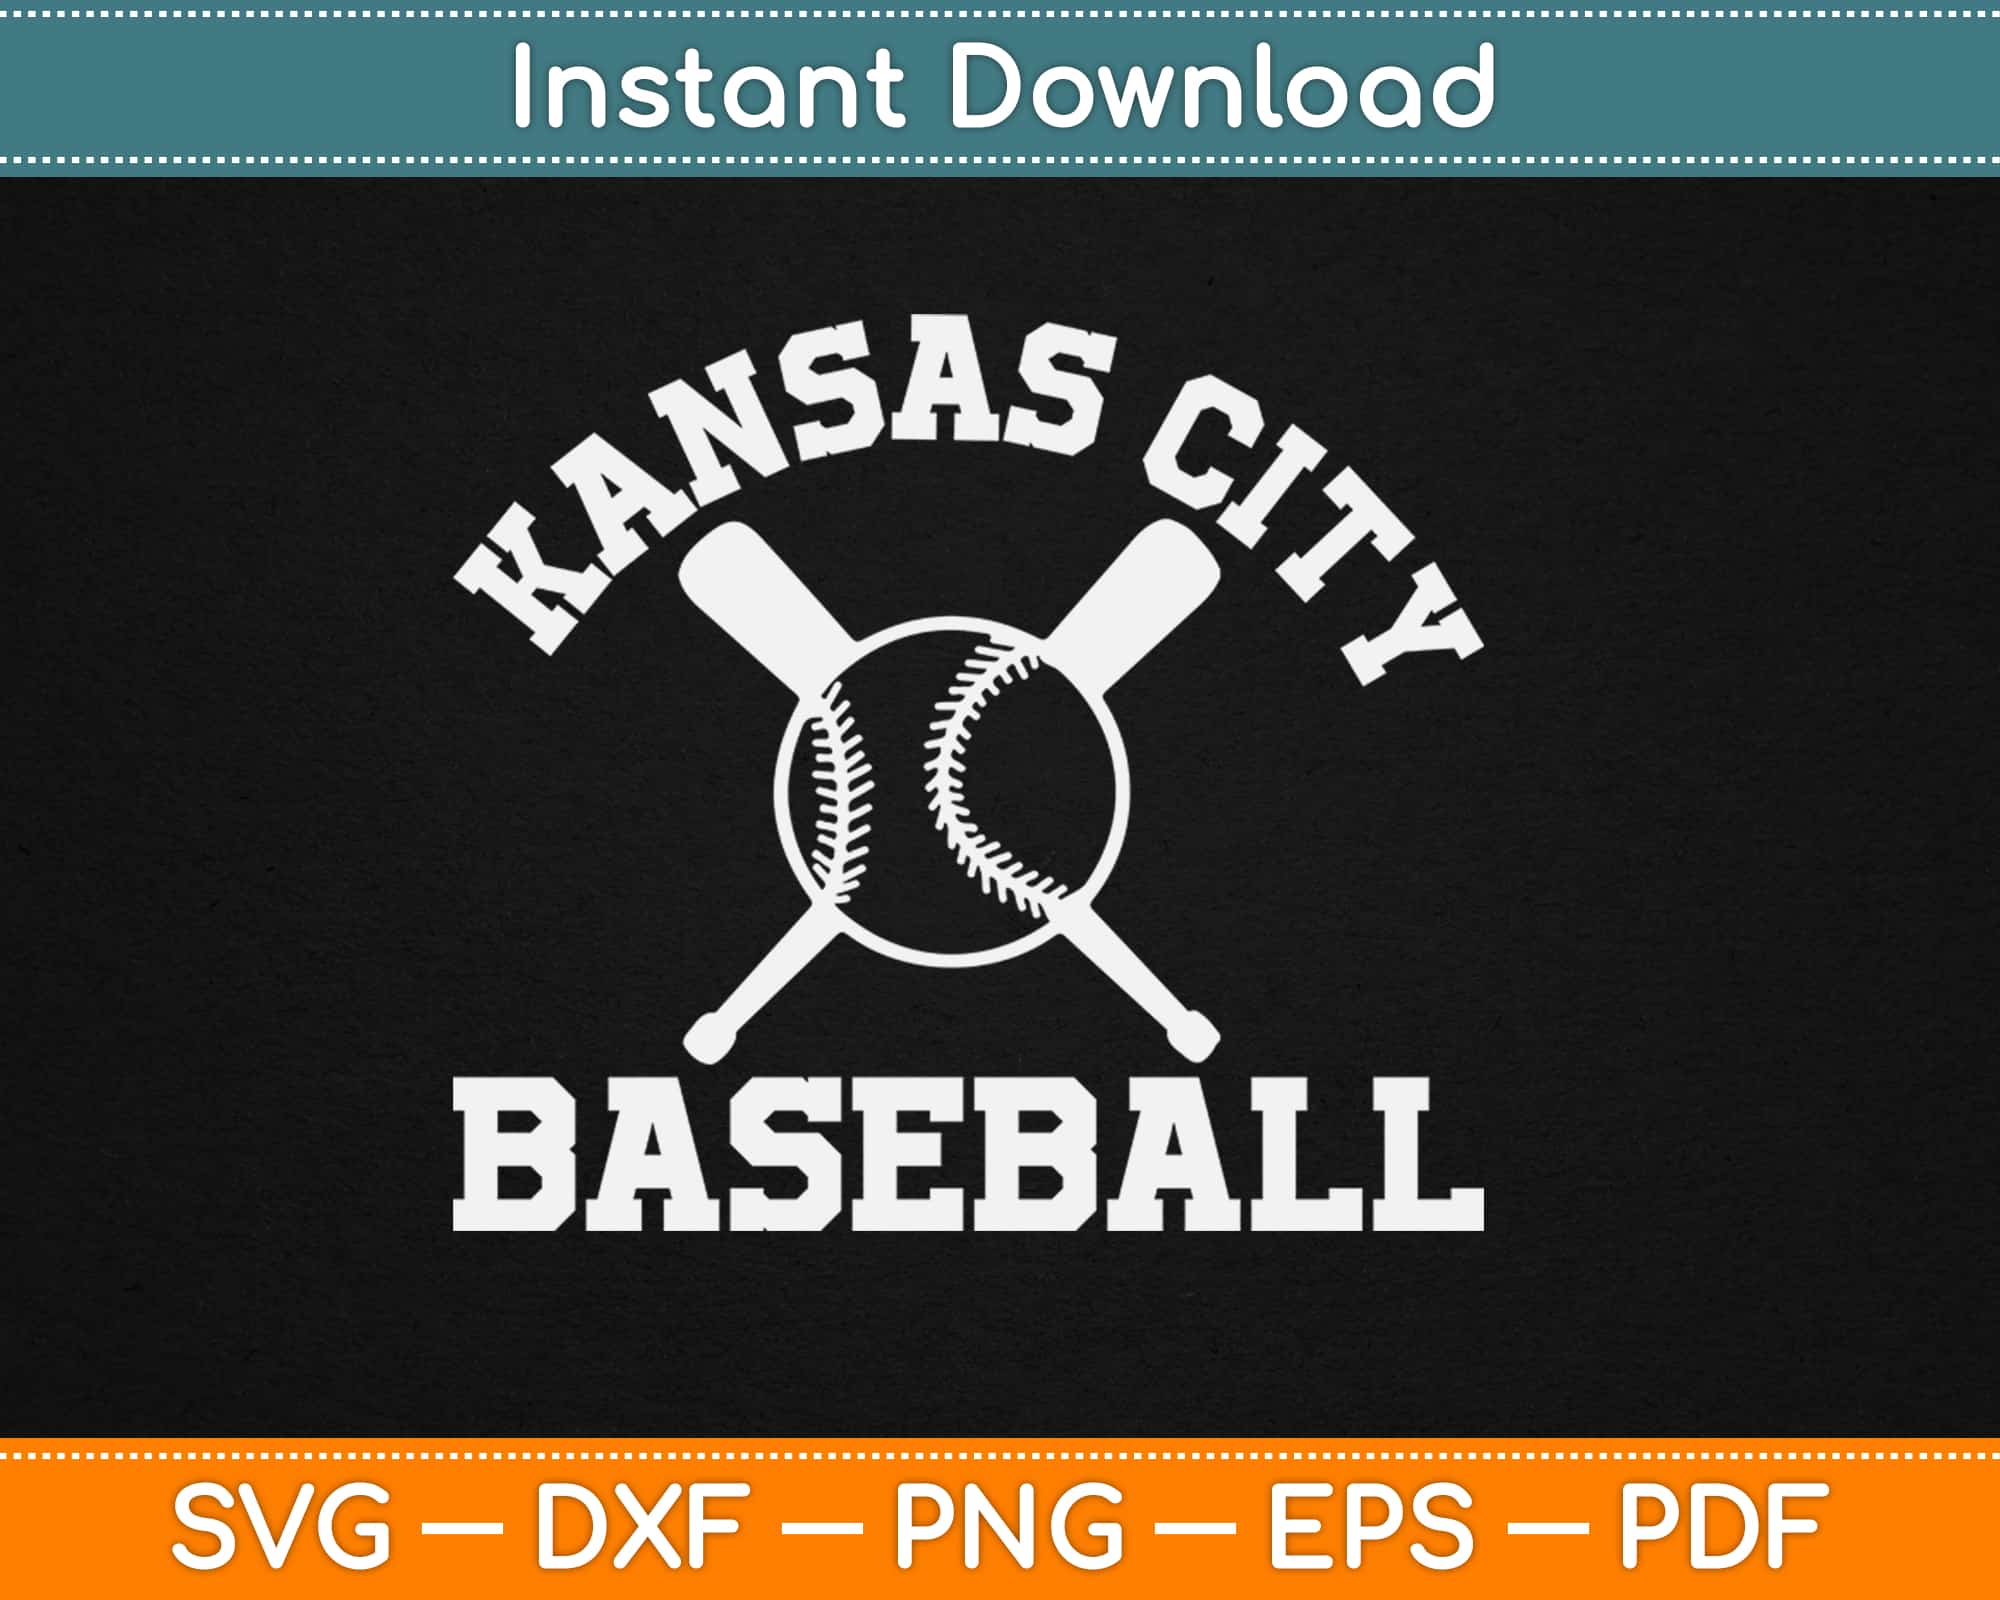 Baseball Svg Png Dxf Eps Pdf Instant Download Files 